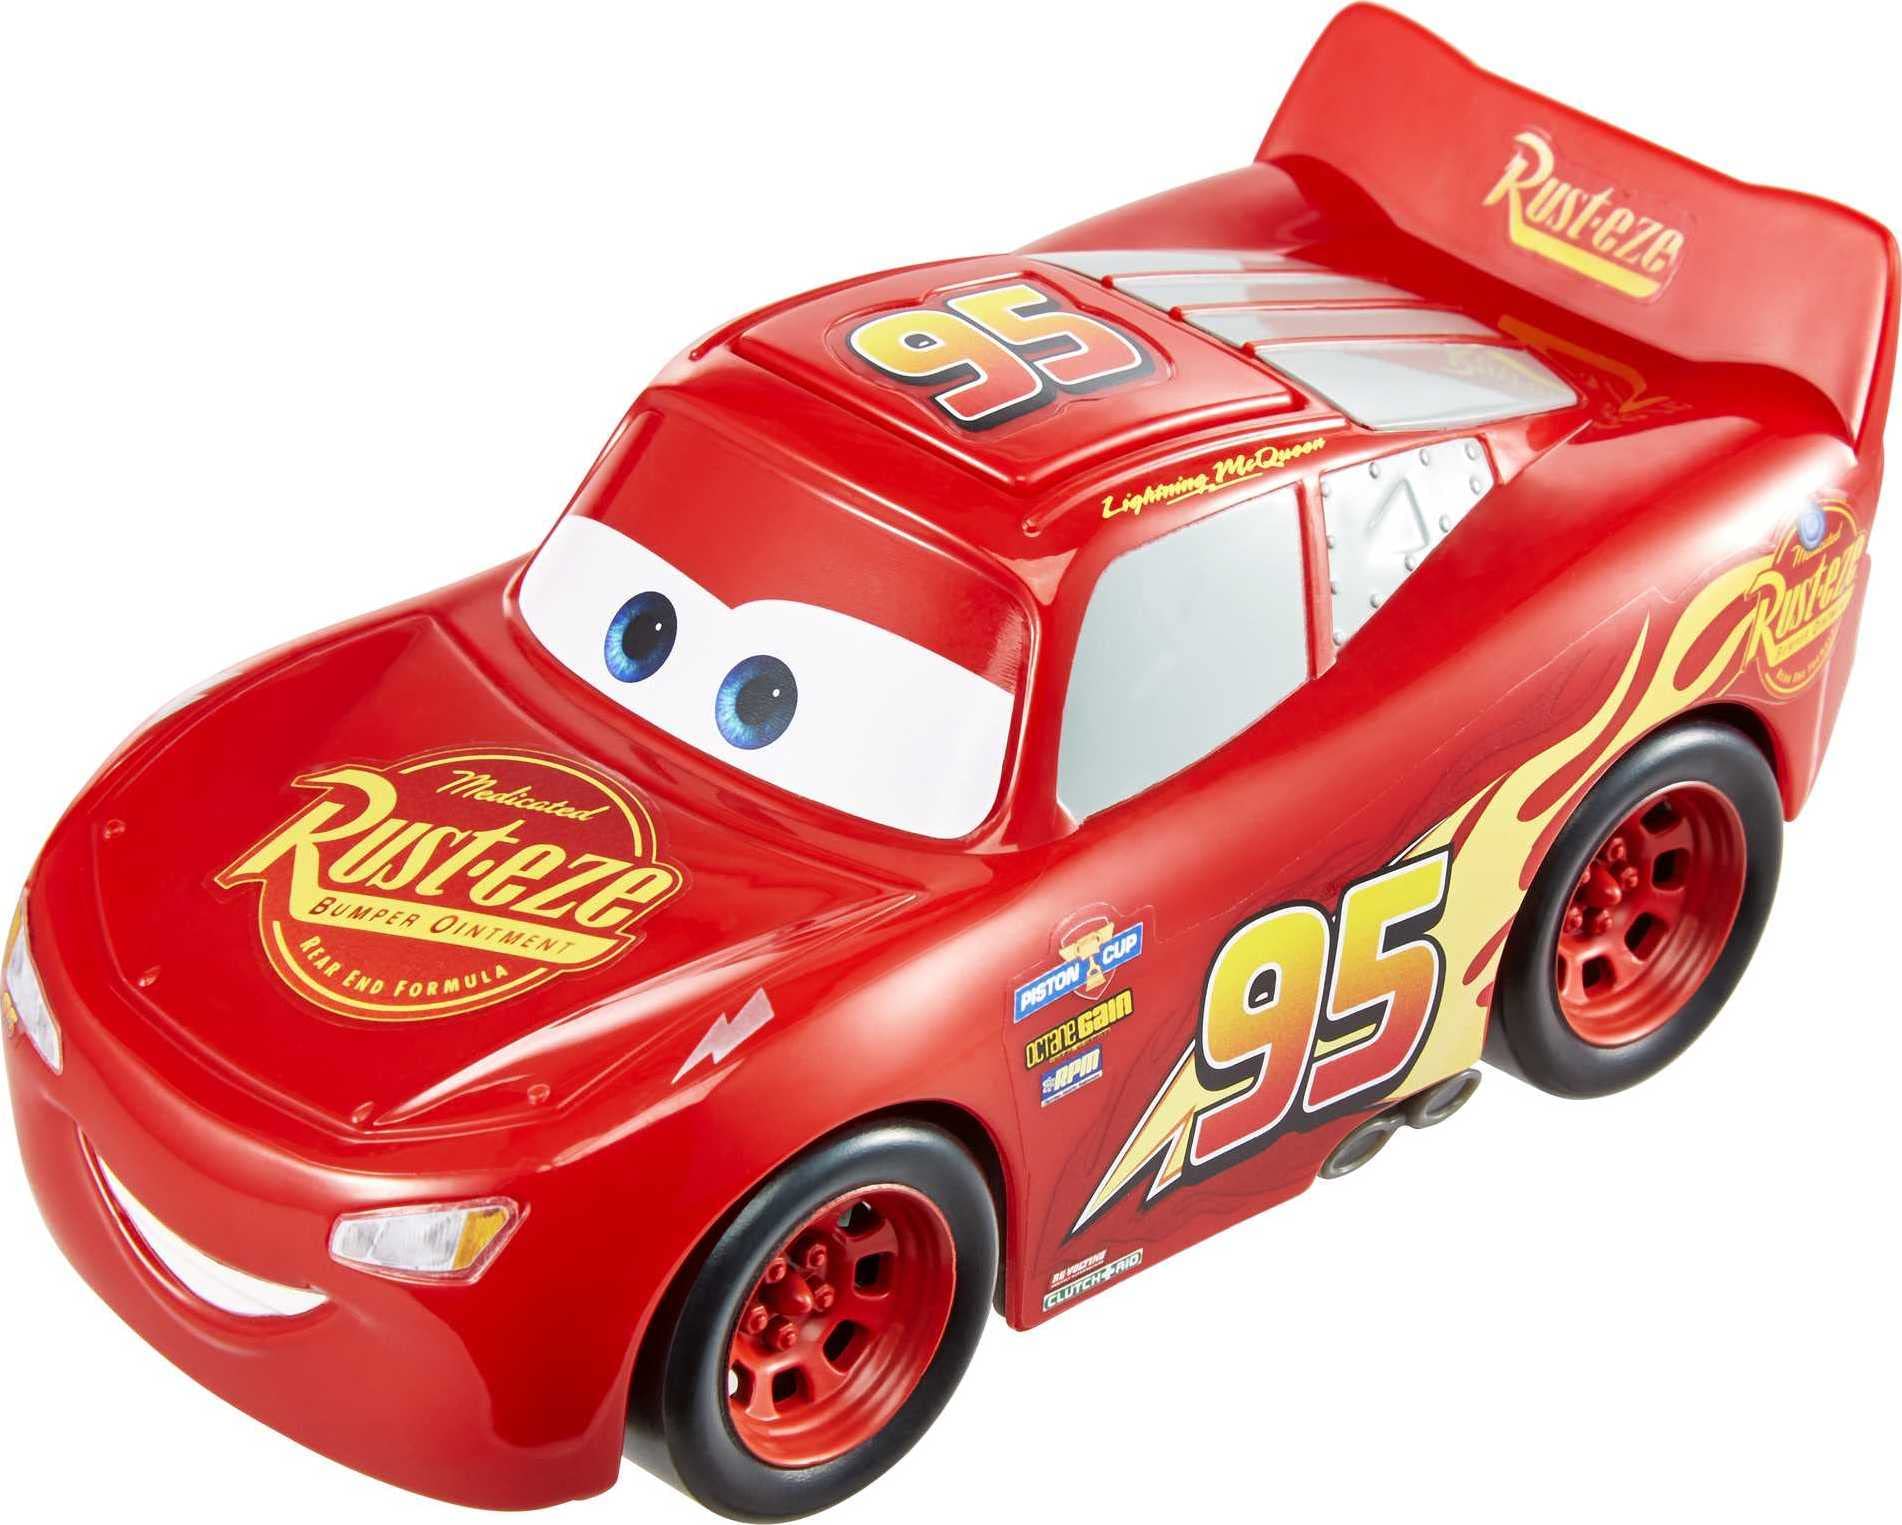 Lightning McQueen toy car.